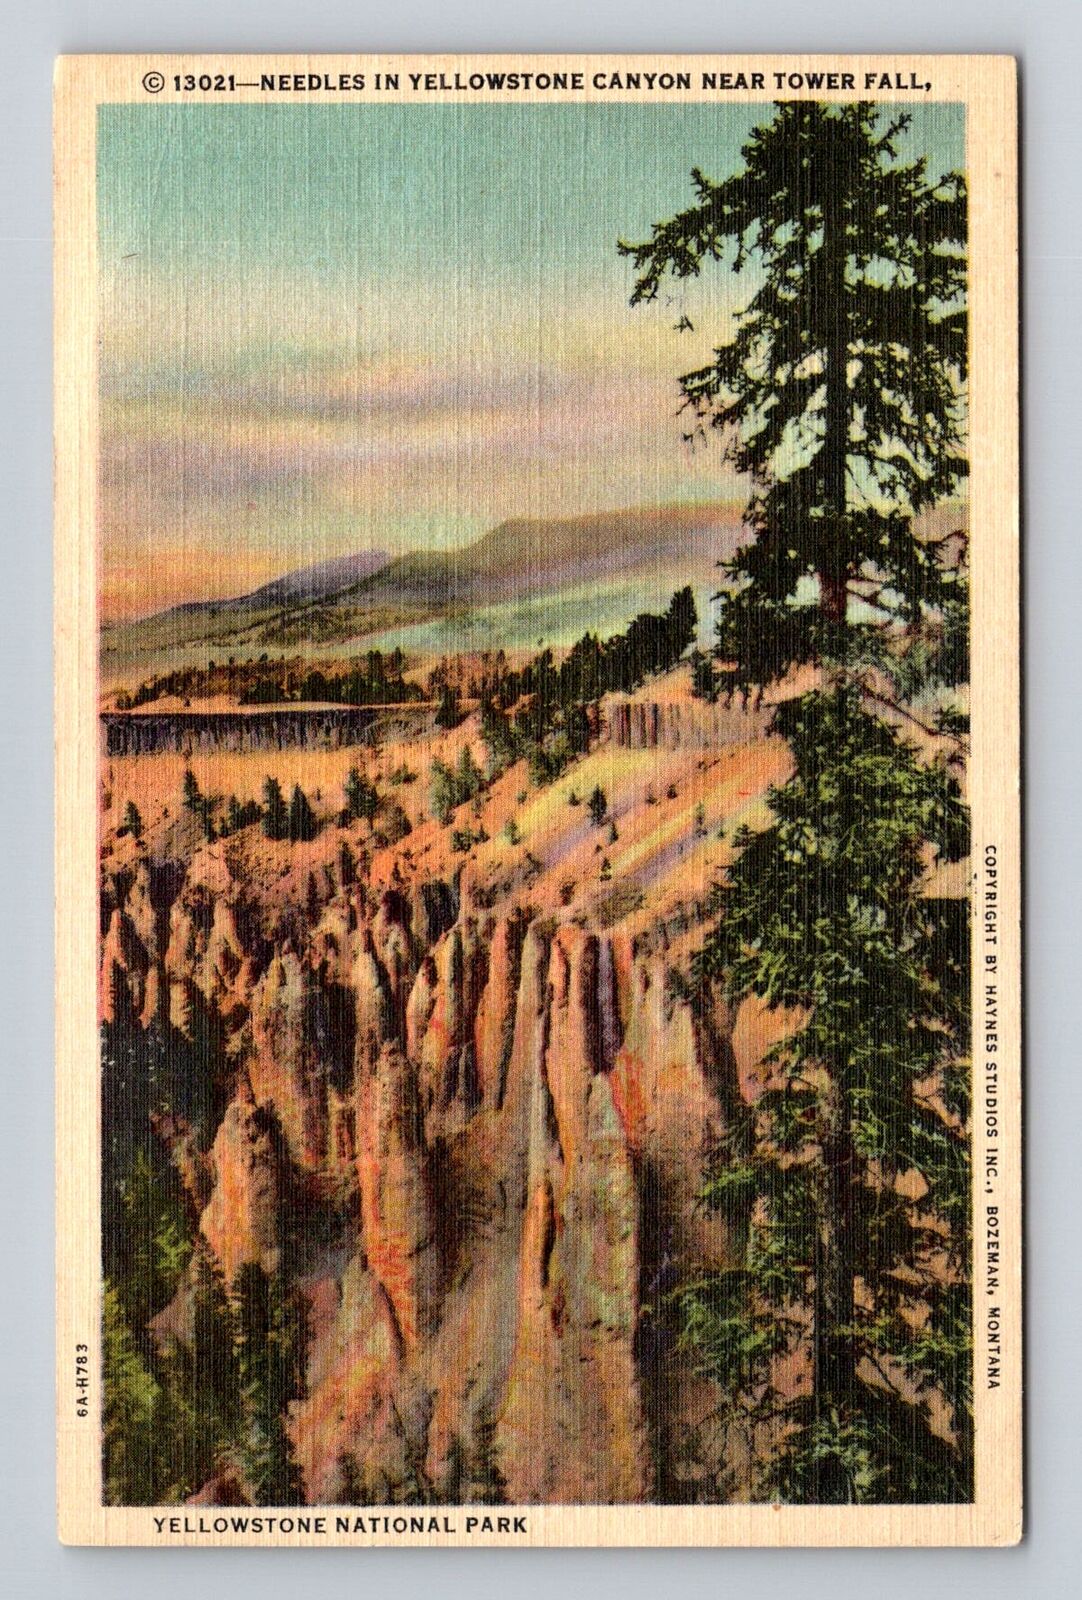 Yellowstone National Park, Needles Series #13021 Vintage Souvenir Postcard